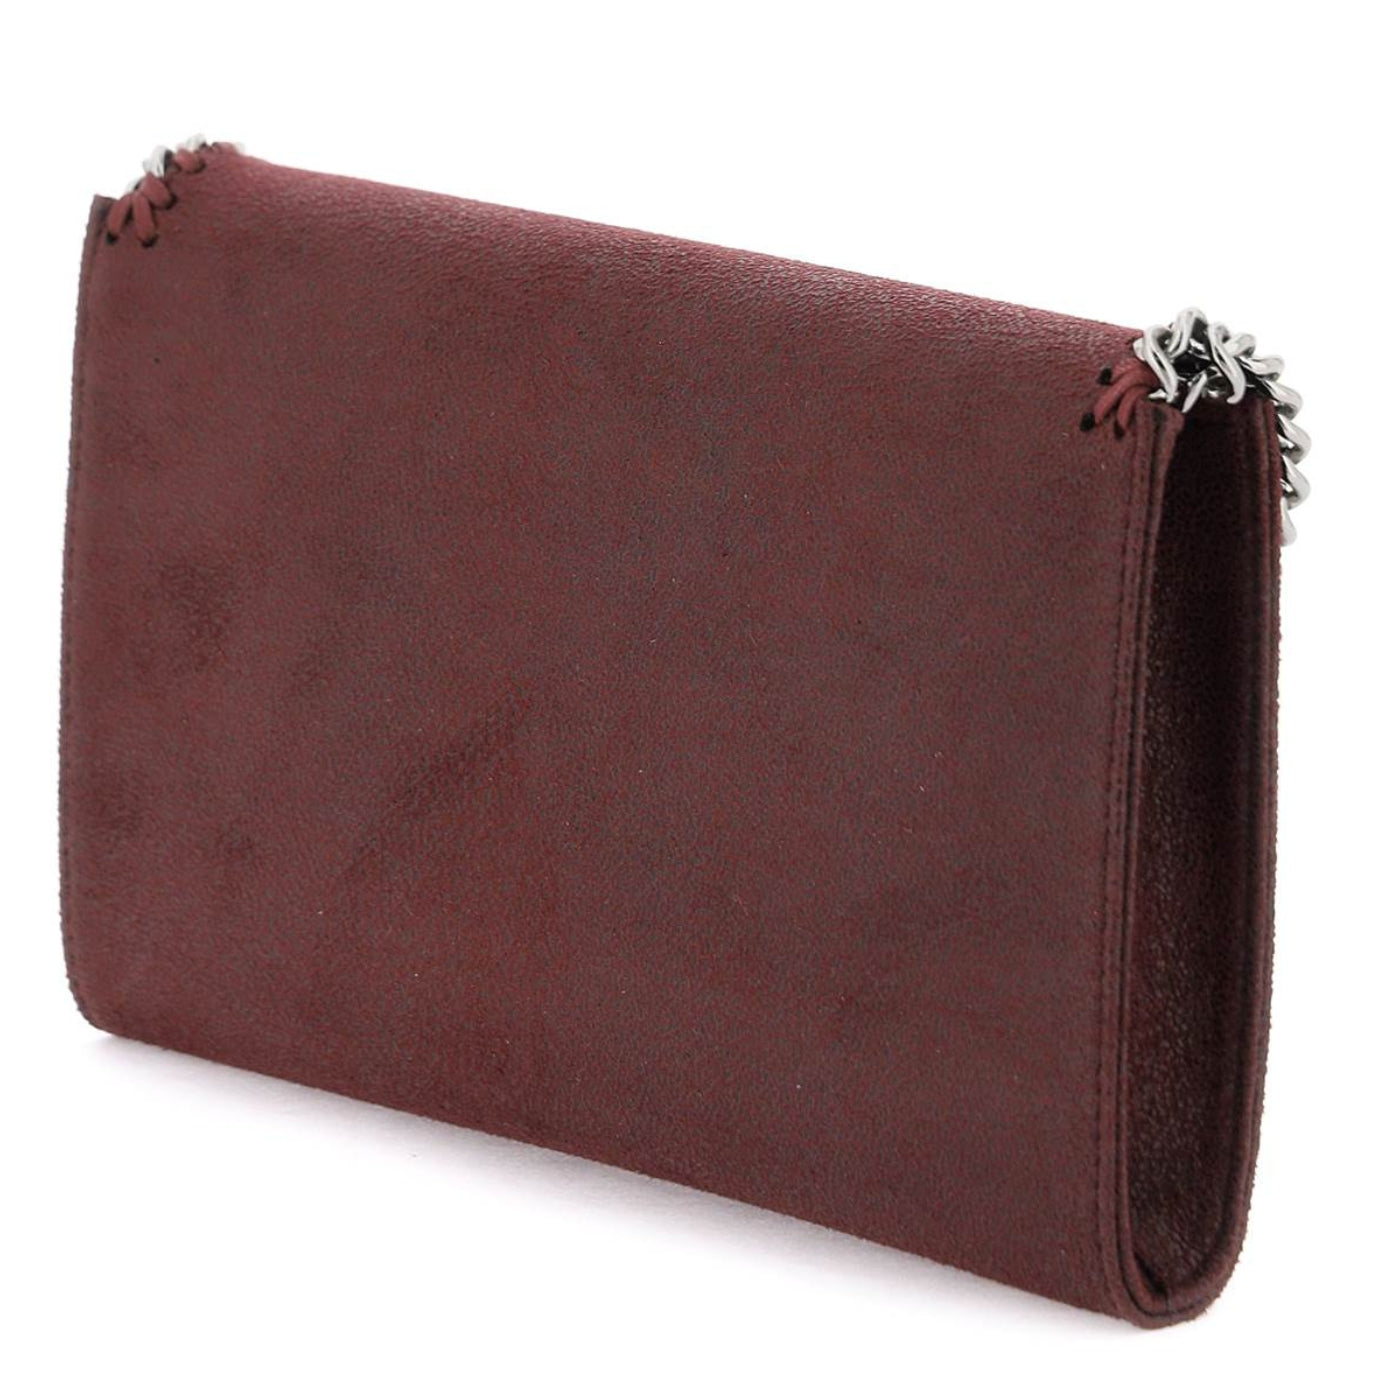 Falabella Wallet Crossbody Bag in Plum Handbags STELLA MCCARTNEY - LOLAMIR